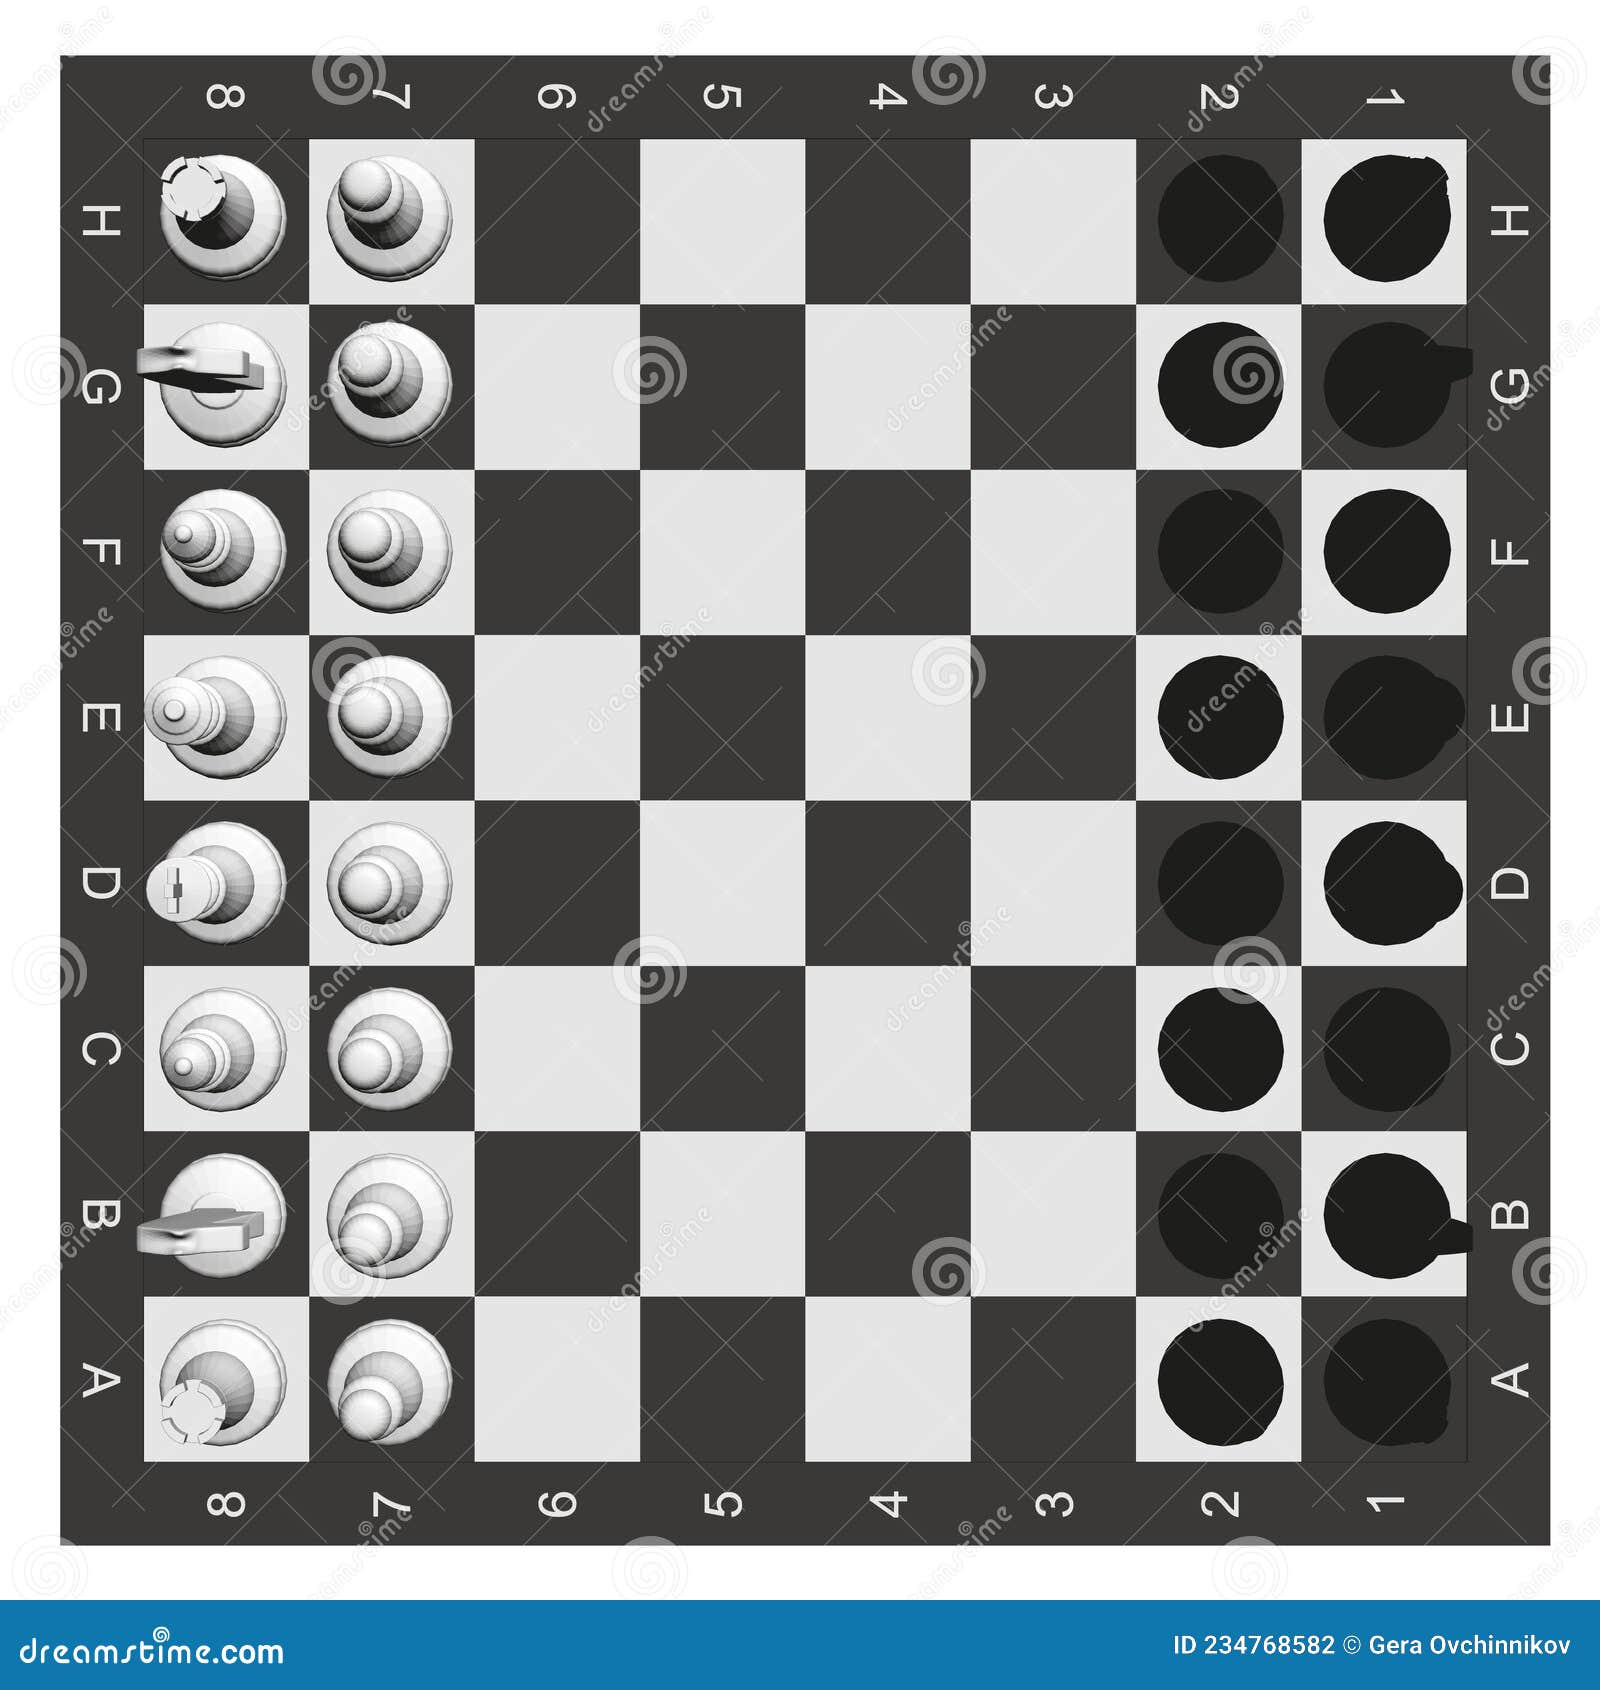 Tabuleiro de xadrez e peças de xadrez 3d vector ilustração